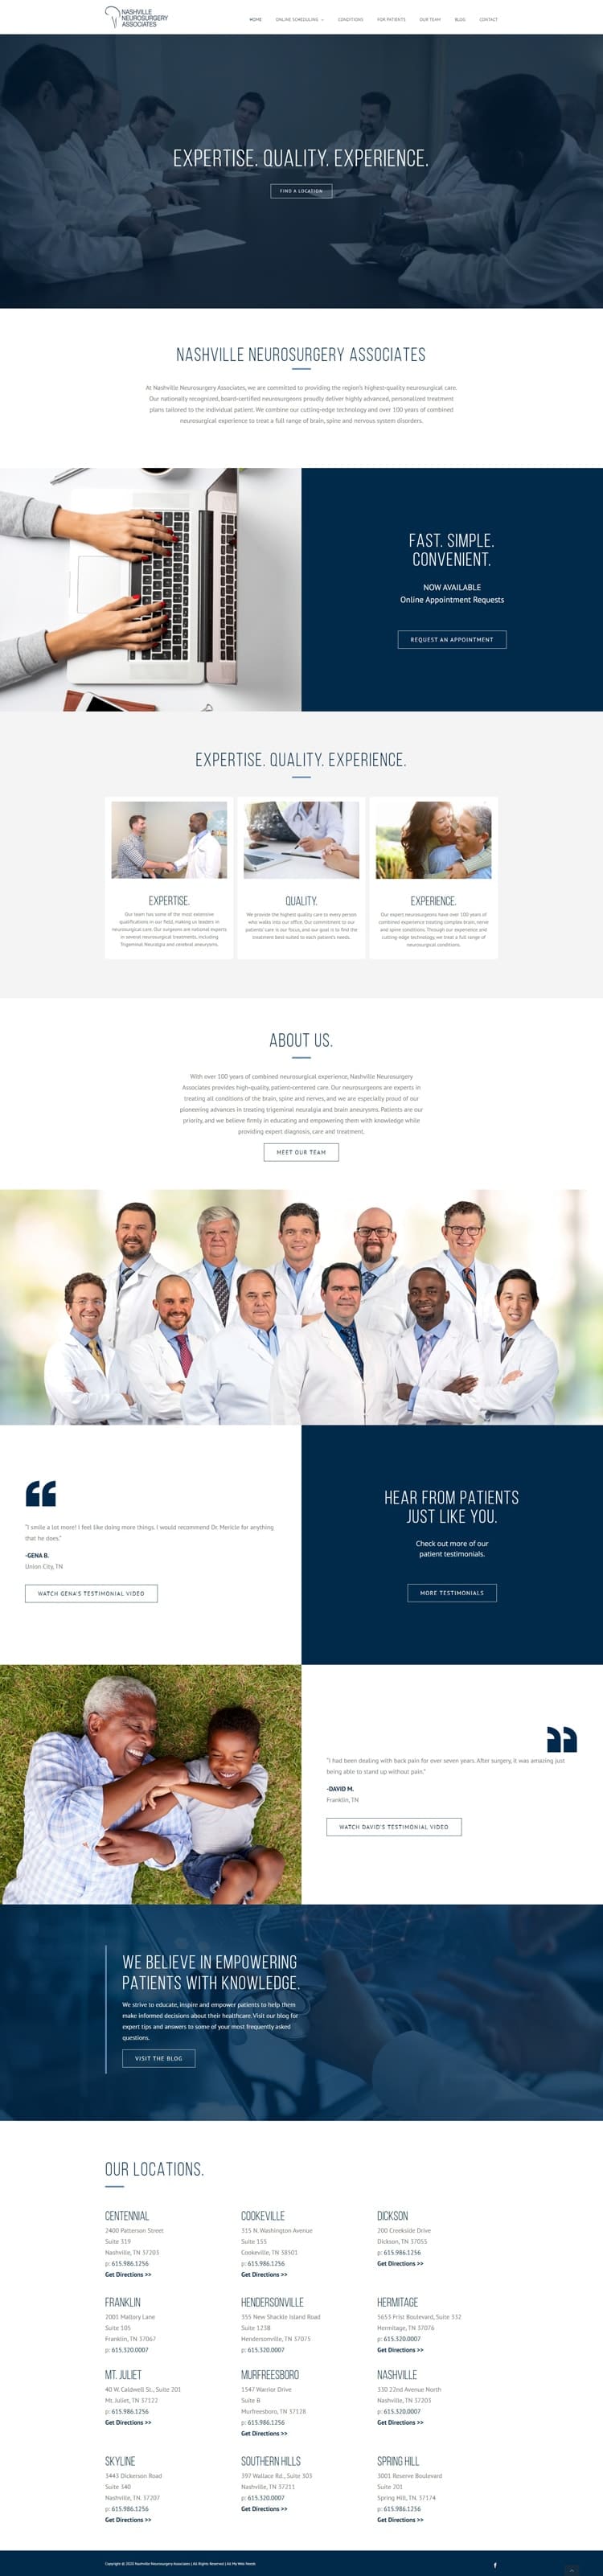 Web design full screen capture for Nashville Neurosurgery Associates